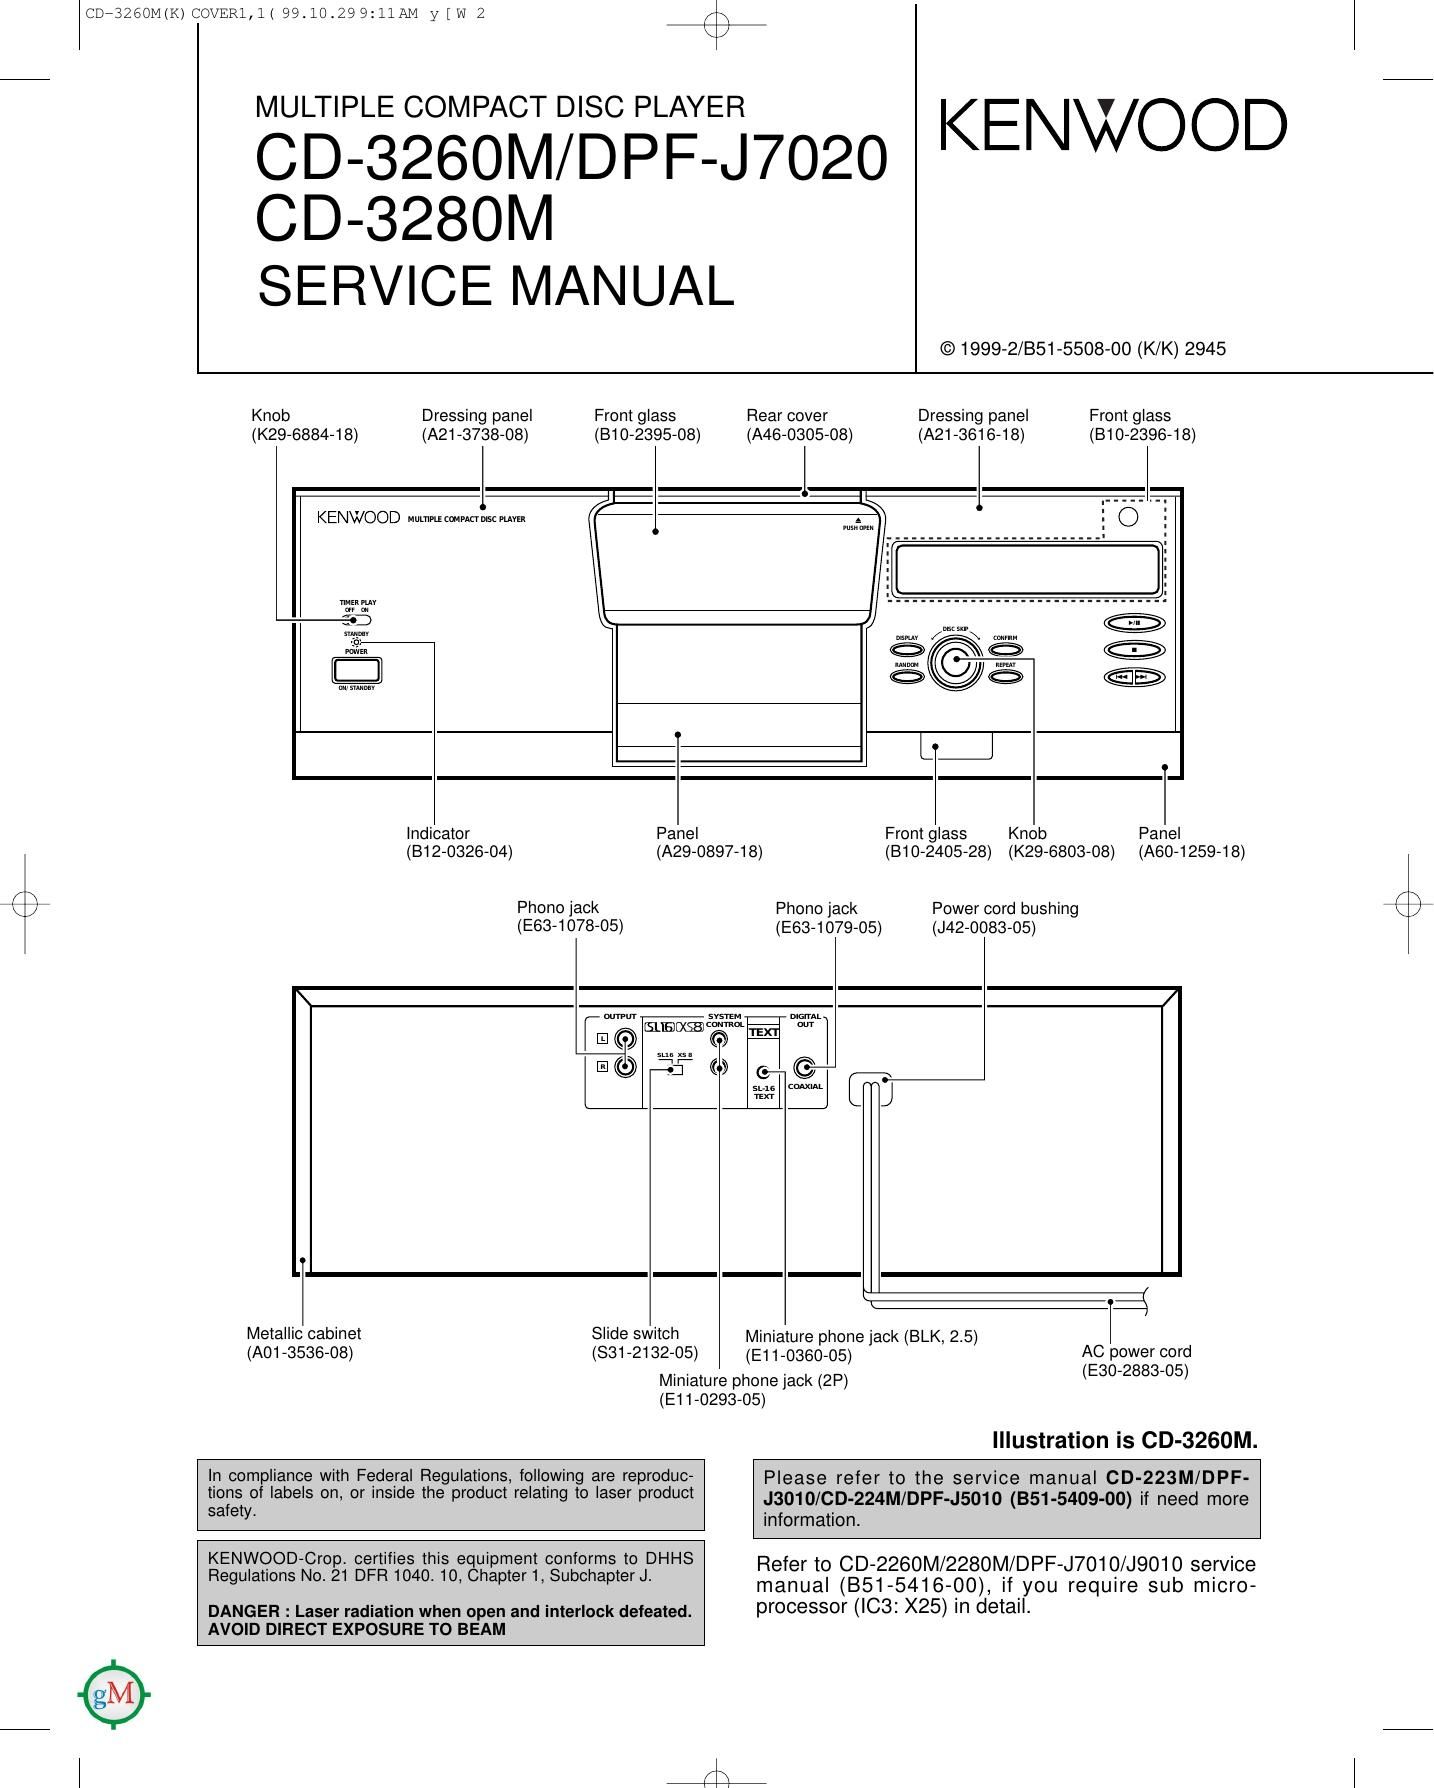 Kenwood DPFJ 7020 Service Manual